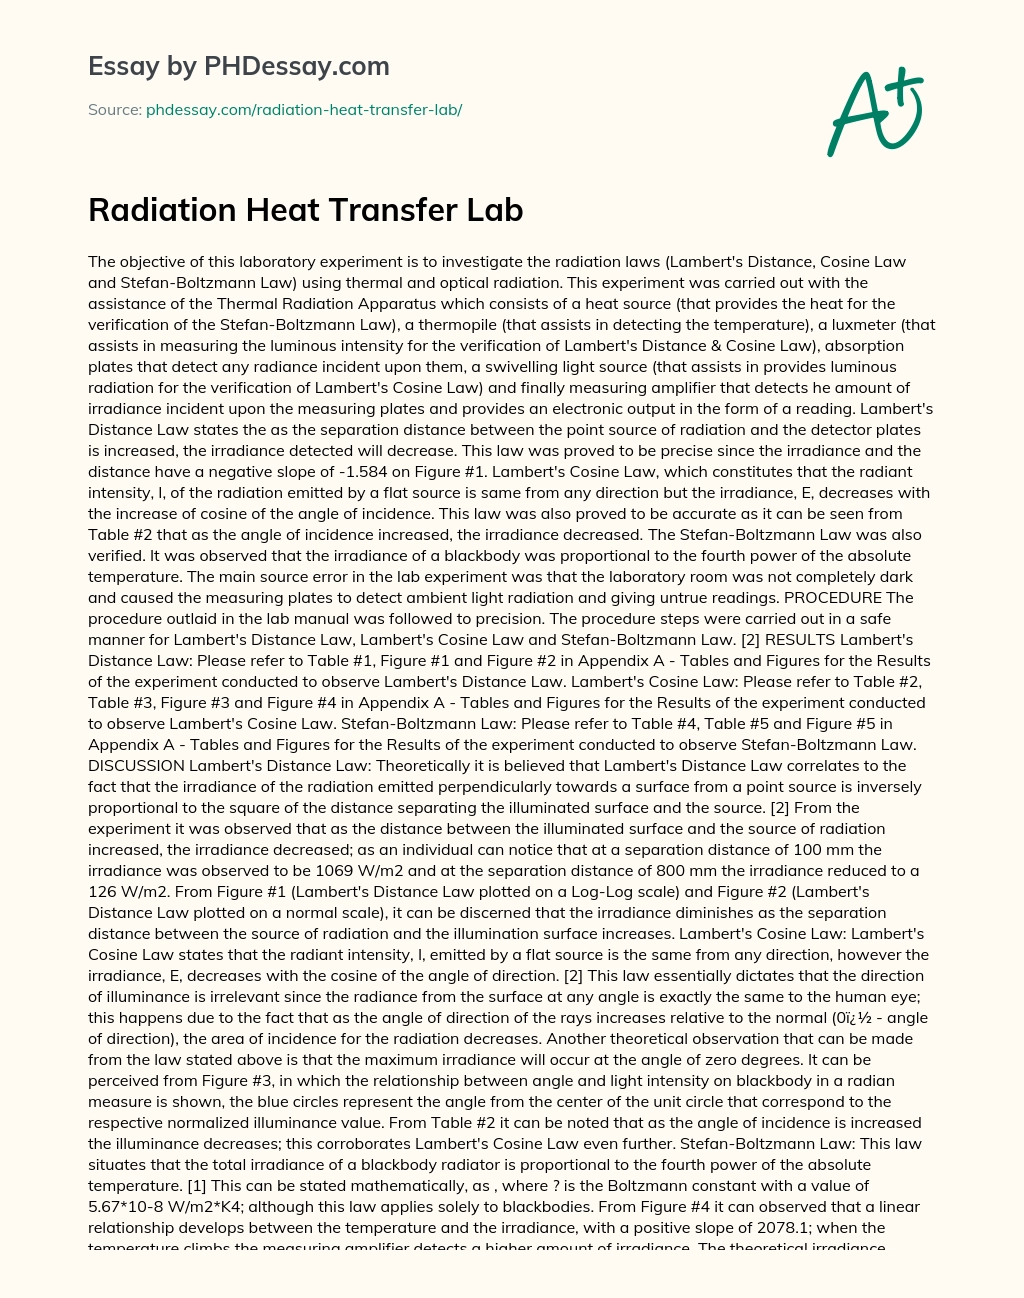 Radiation Heat Transfer Lab essay